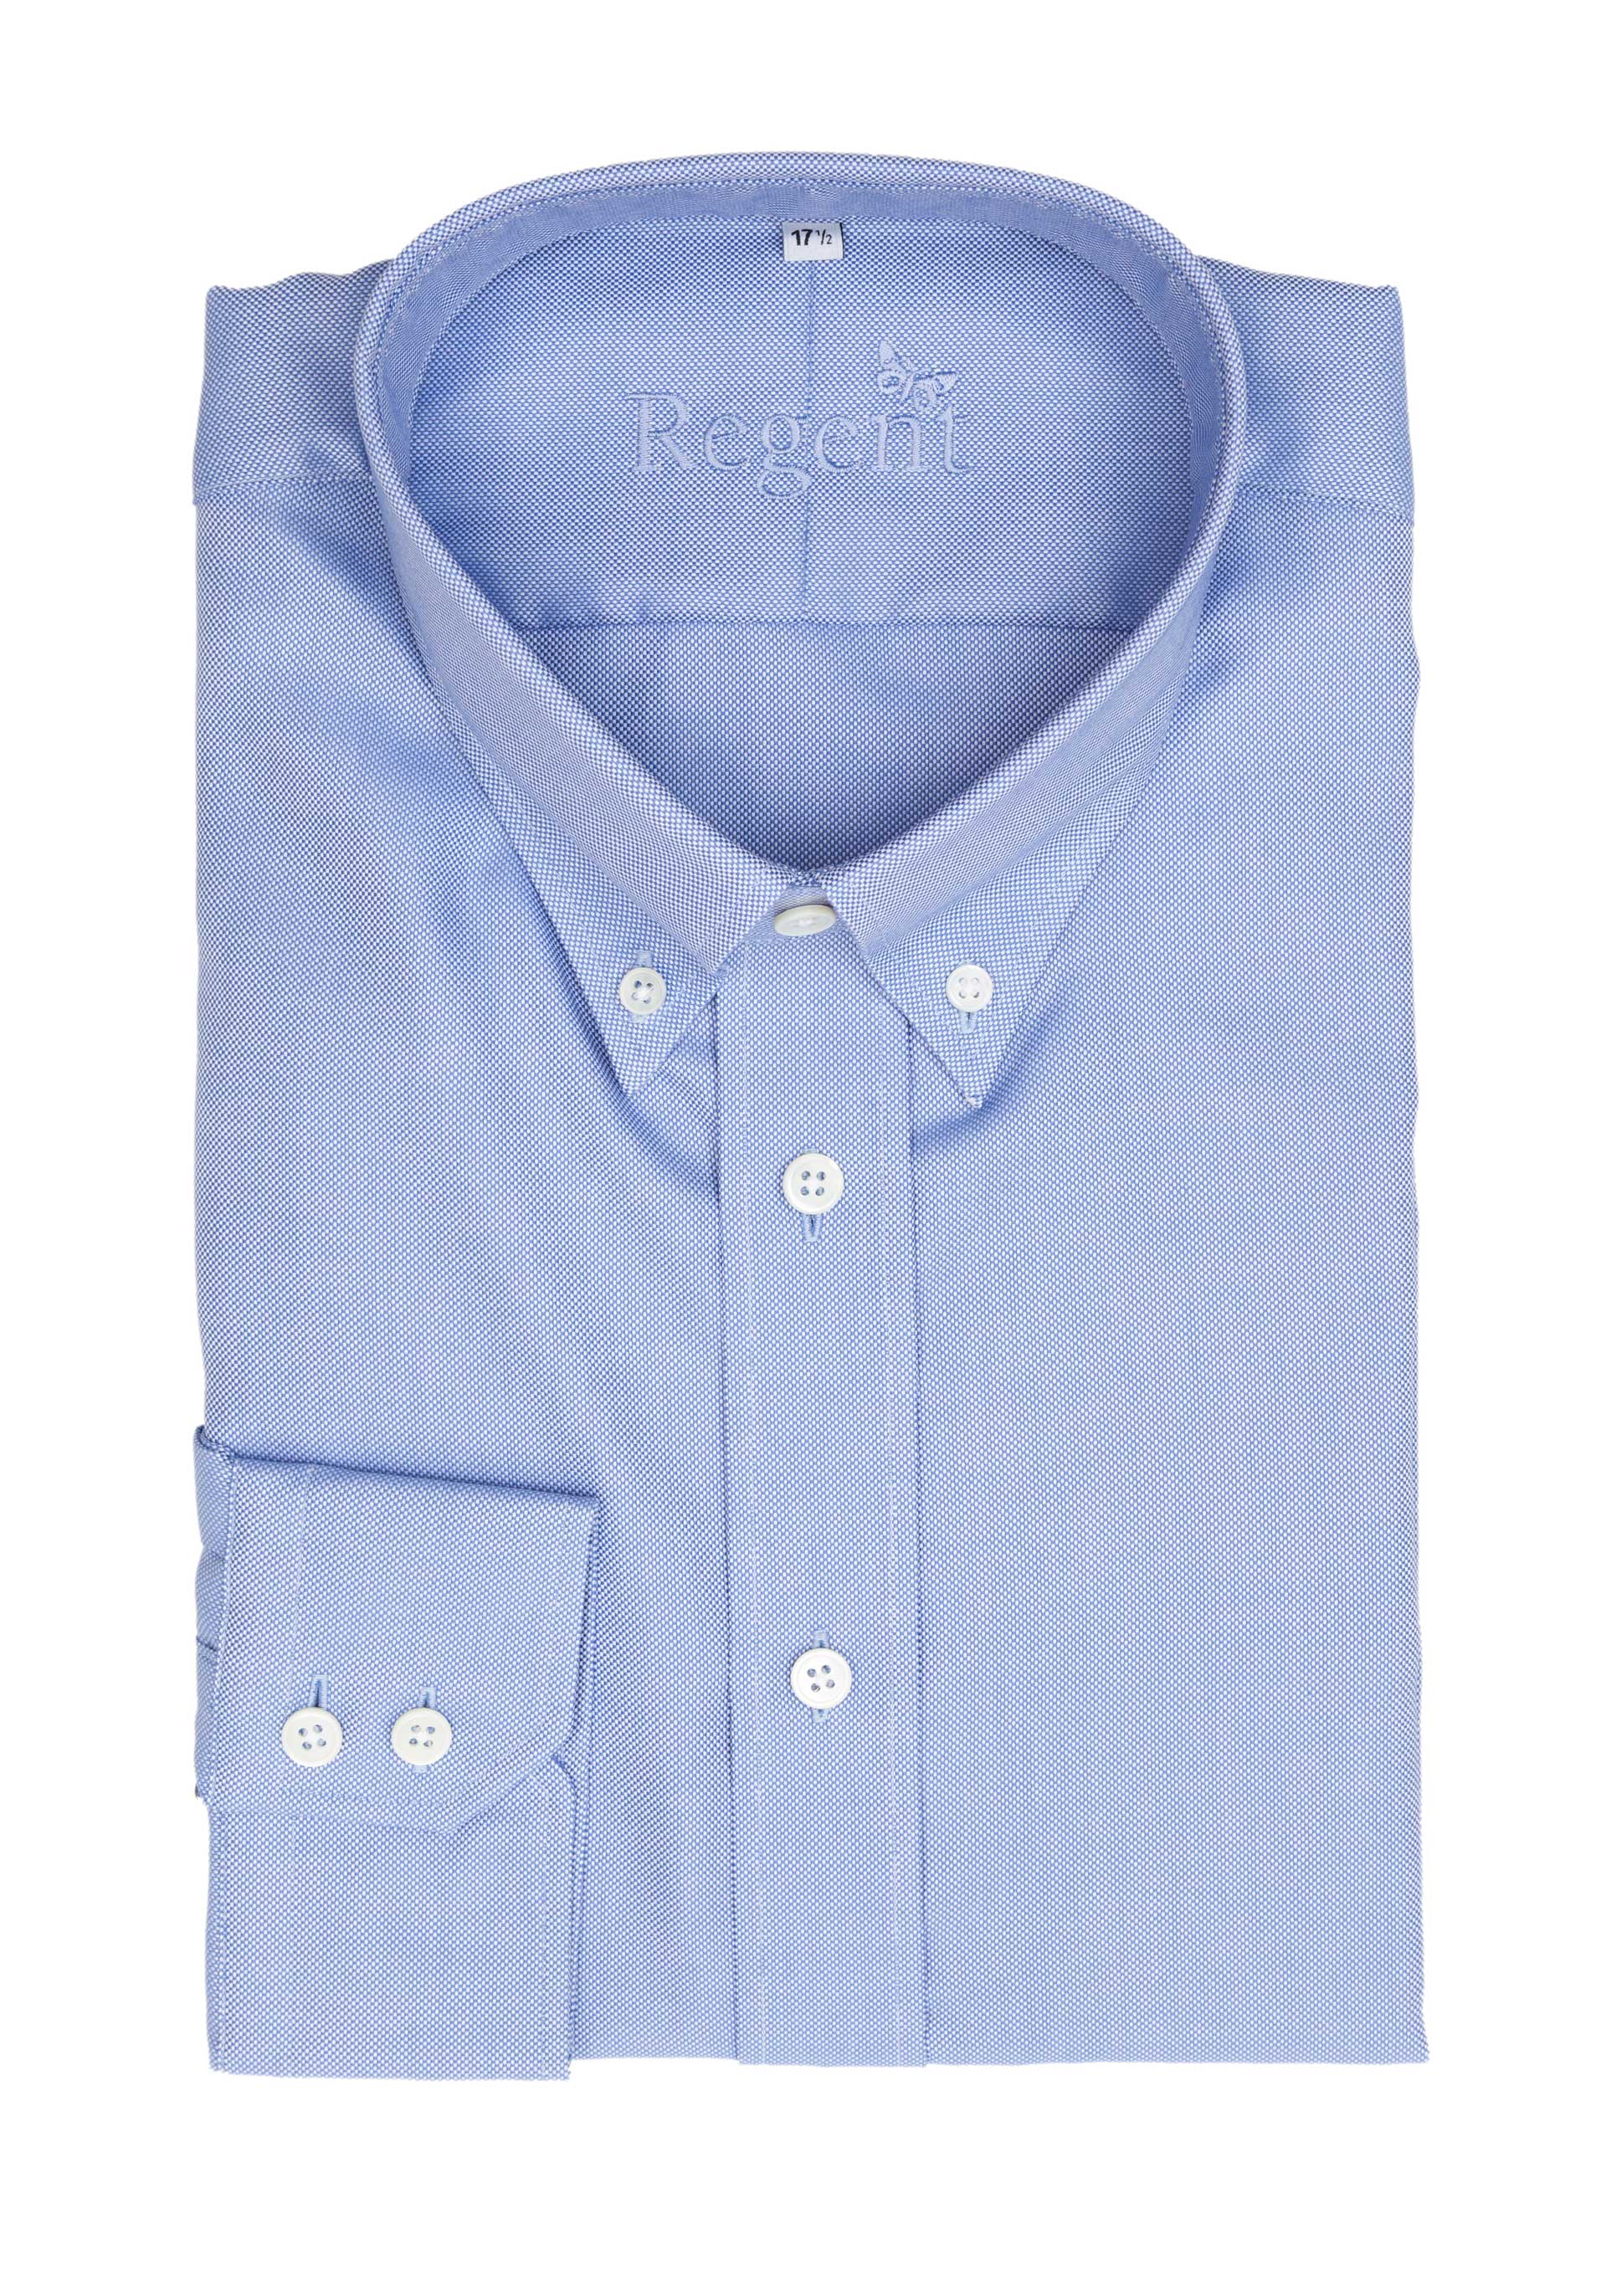 Regent - Heritage - Cotton Twill Button Down Shirt – Light Blue Oxford - Regent Tailoring